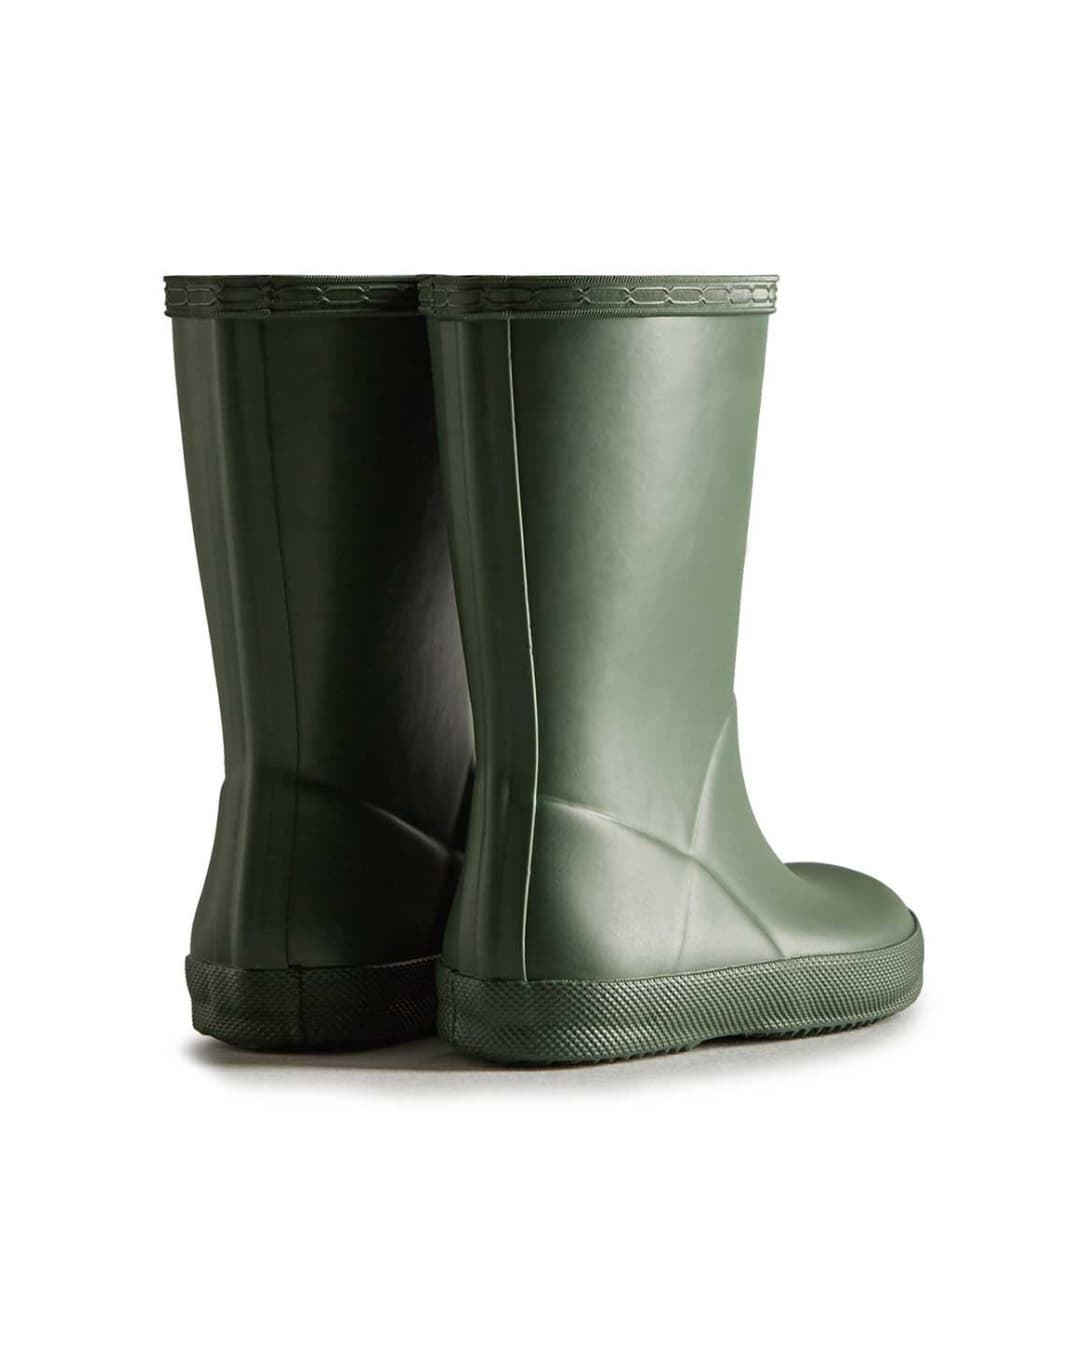 Hunter Children's Rain Boots First Green - Image 3